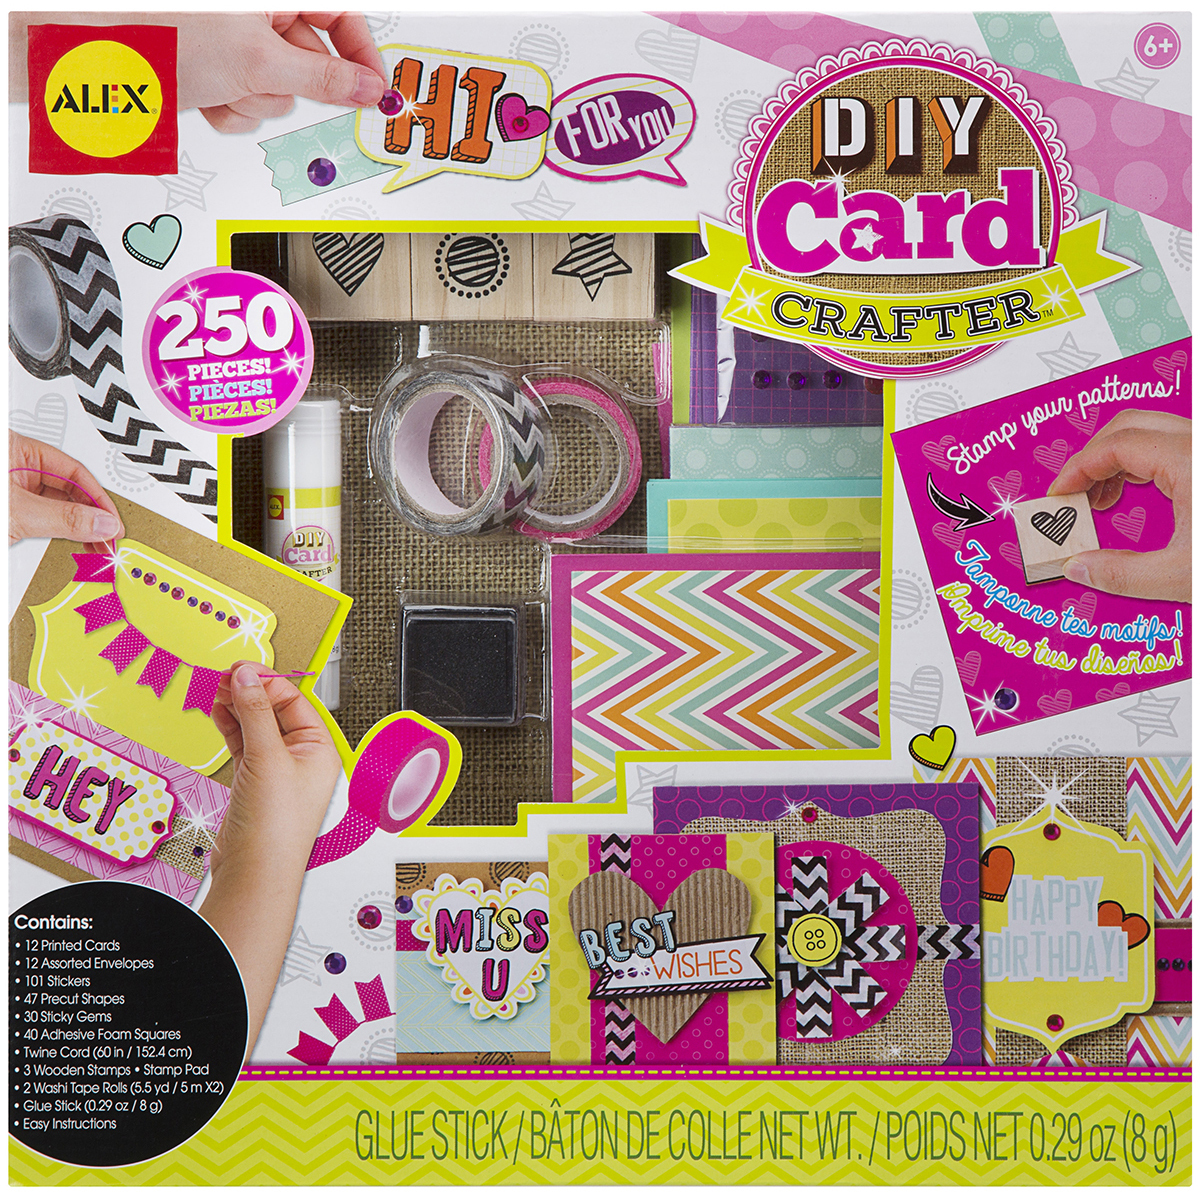 ALEX Toys Craft DIY Card Crafter